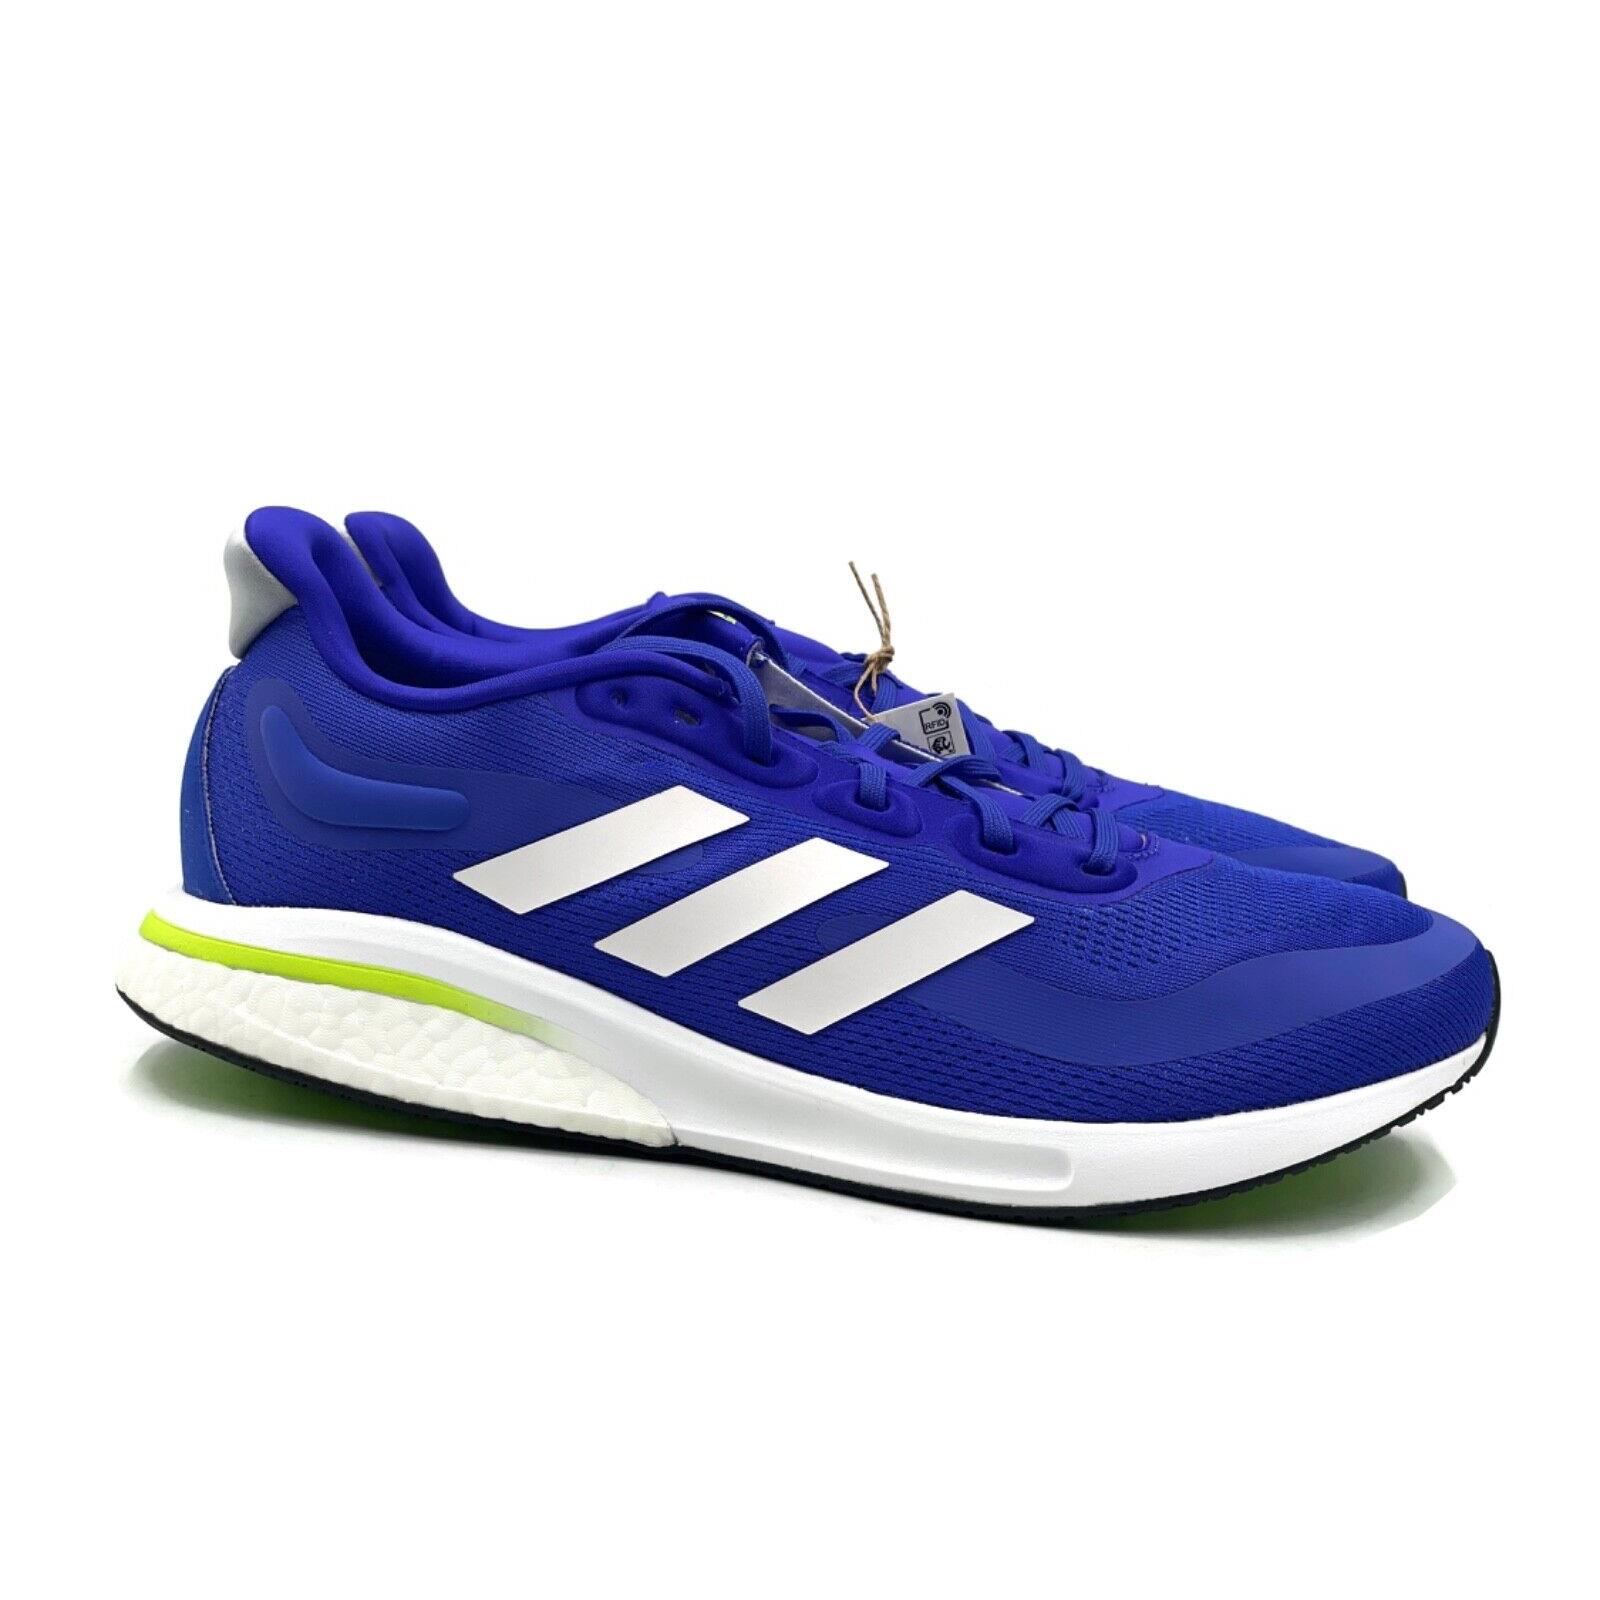 Adidas Supernova Men Casual Running Shoe Blue White Athletic Trainer Sneaker